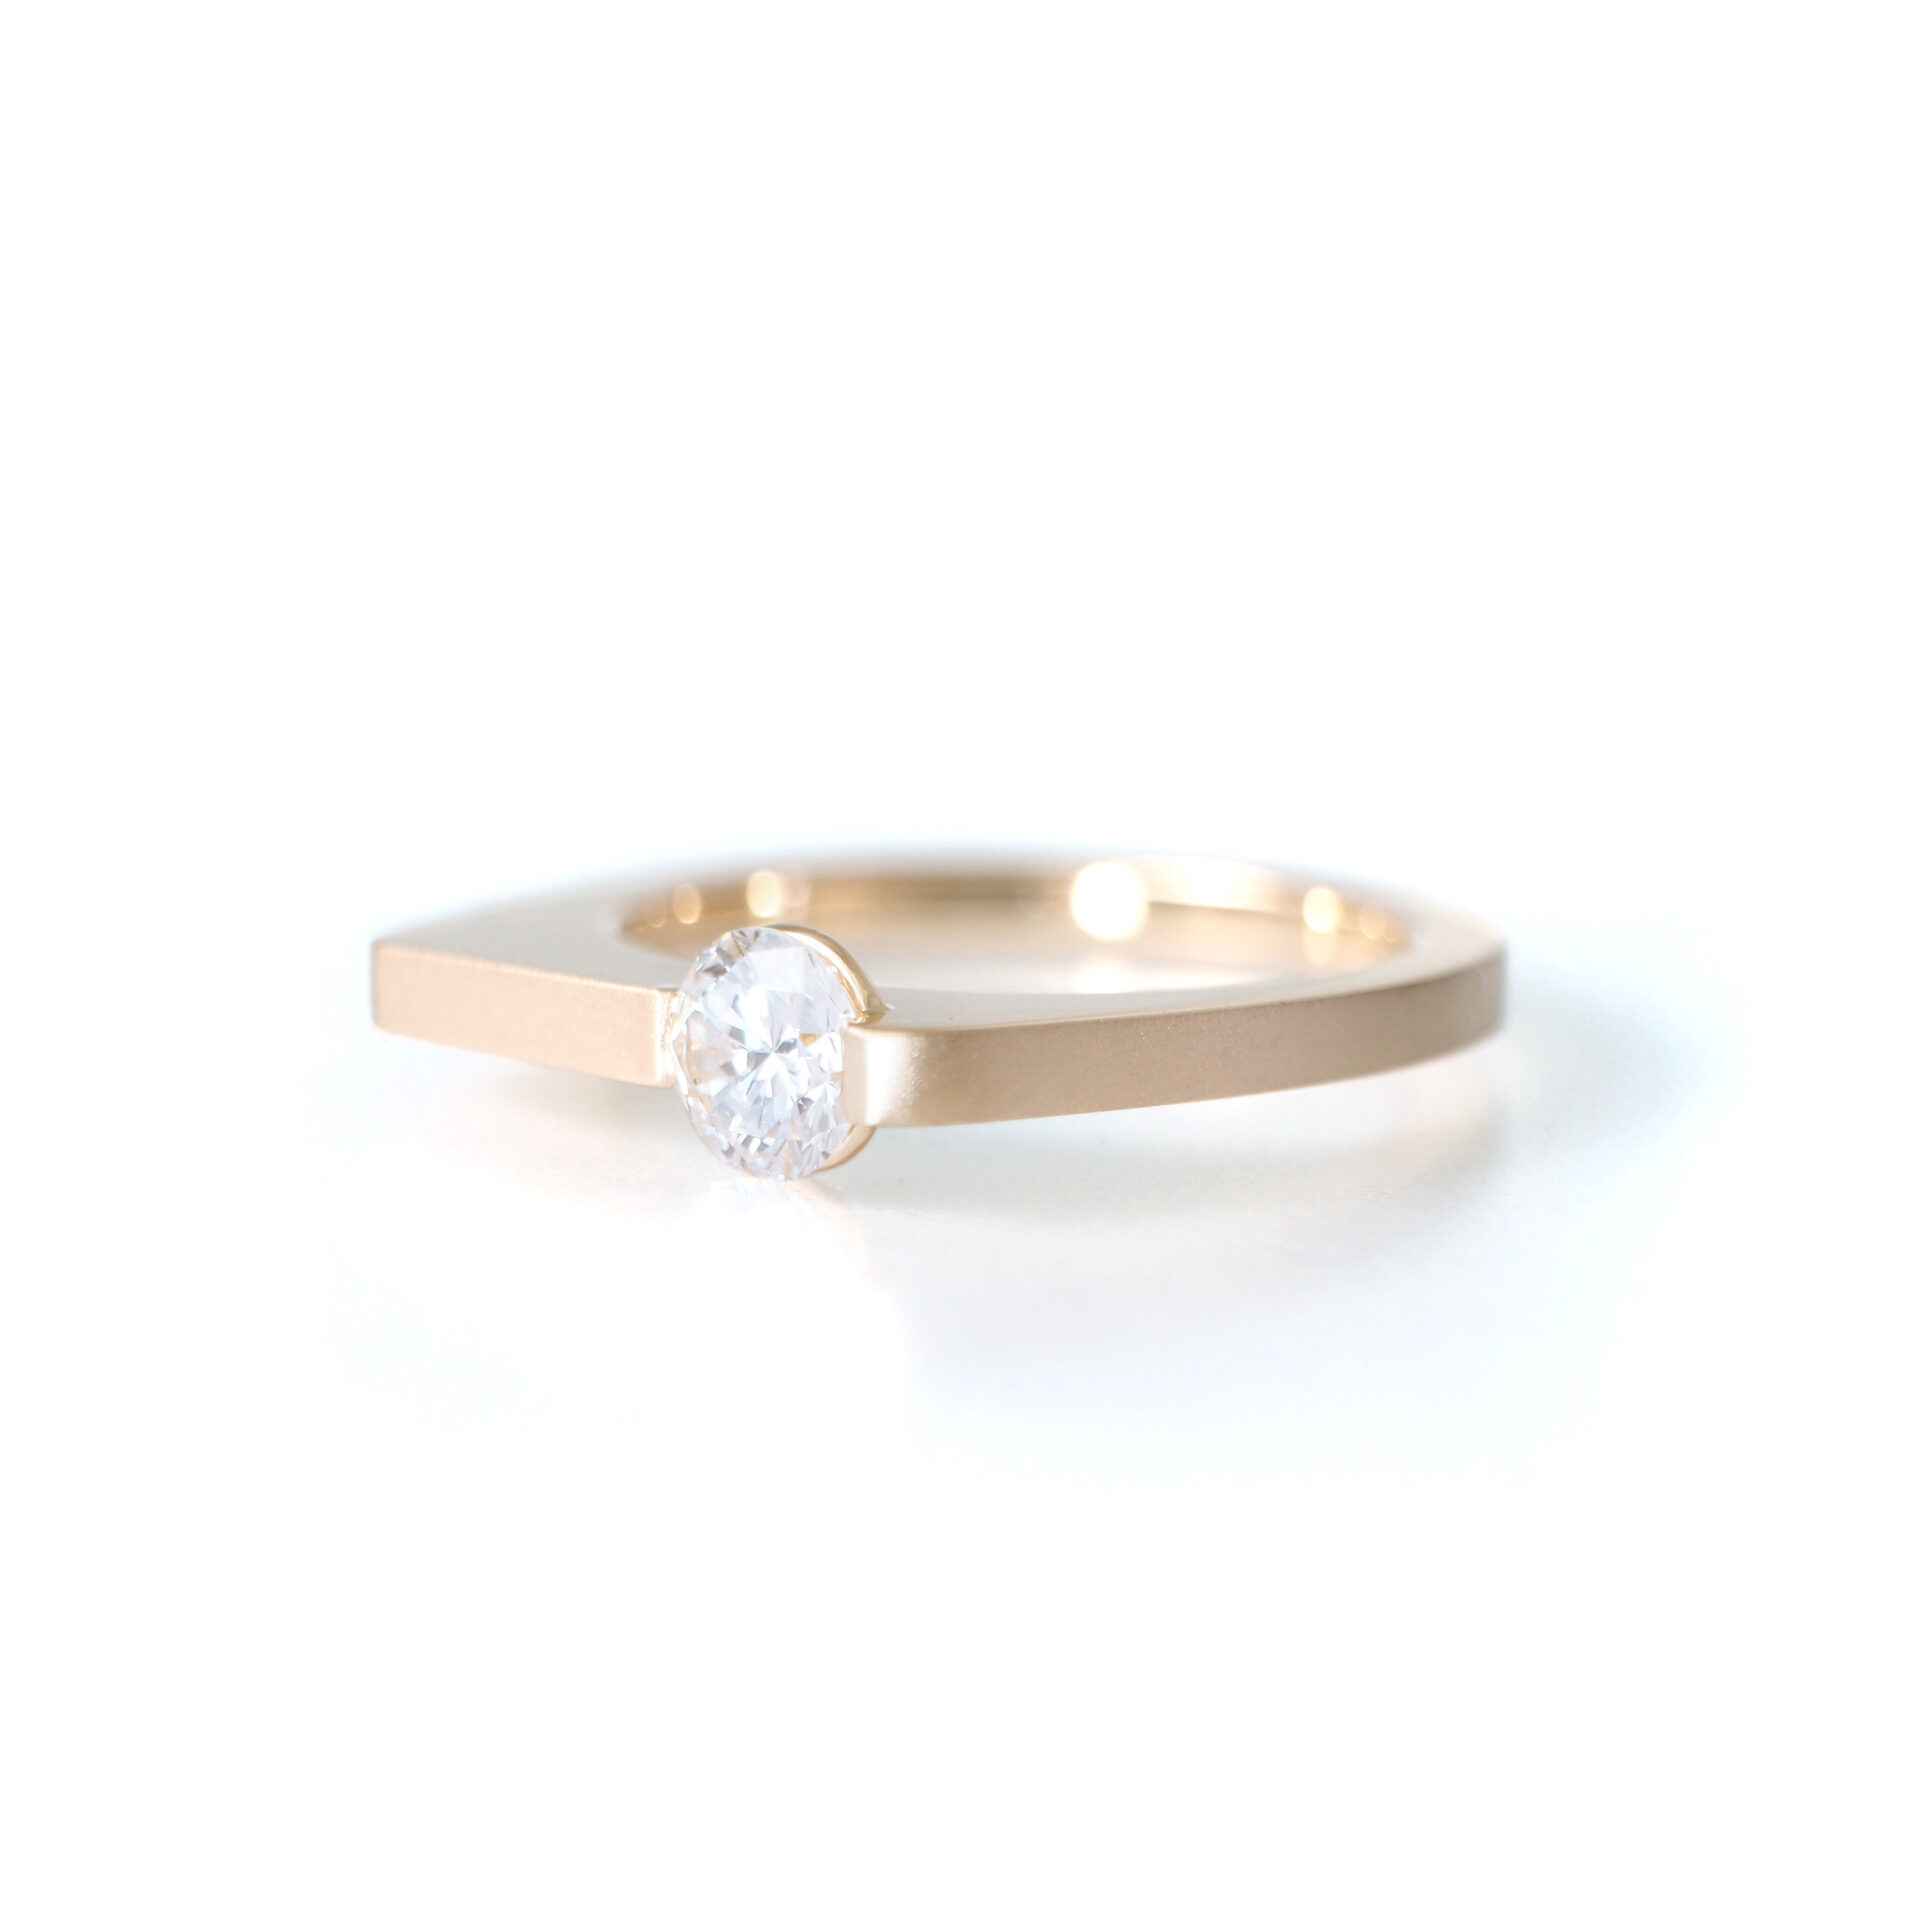 K18 Diamond Ring Bespoke - Simple Design